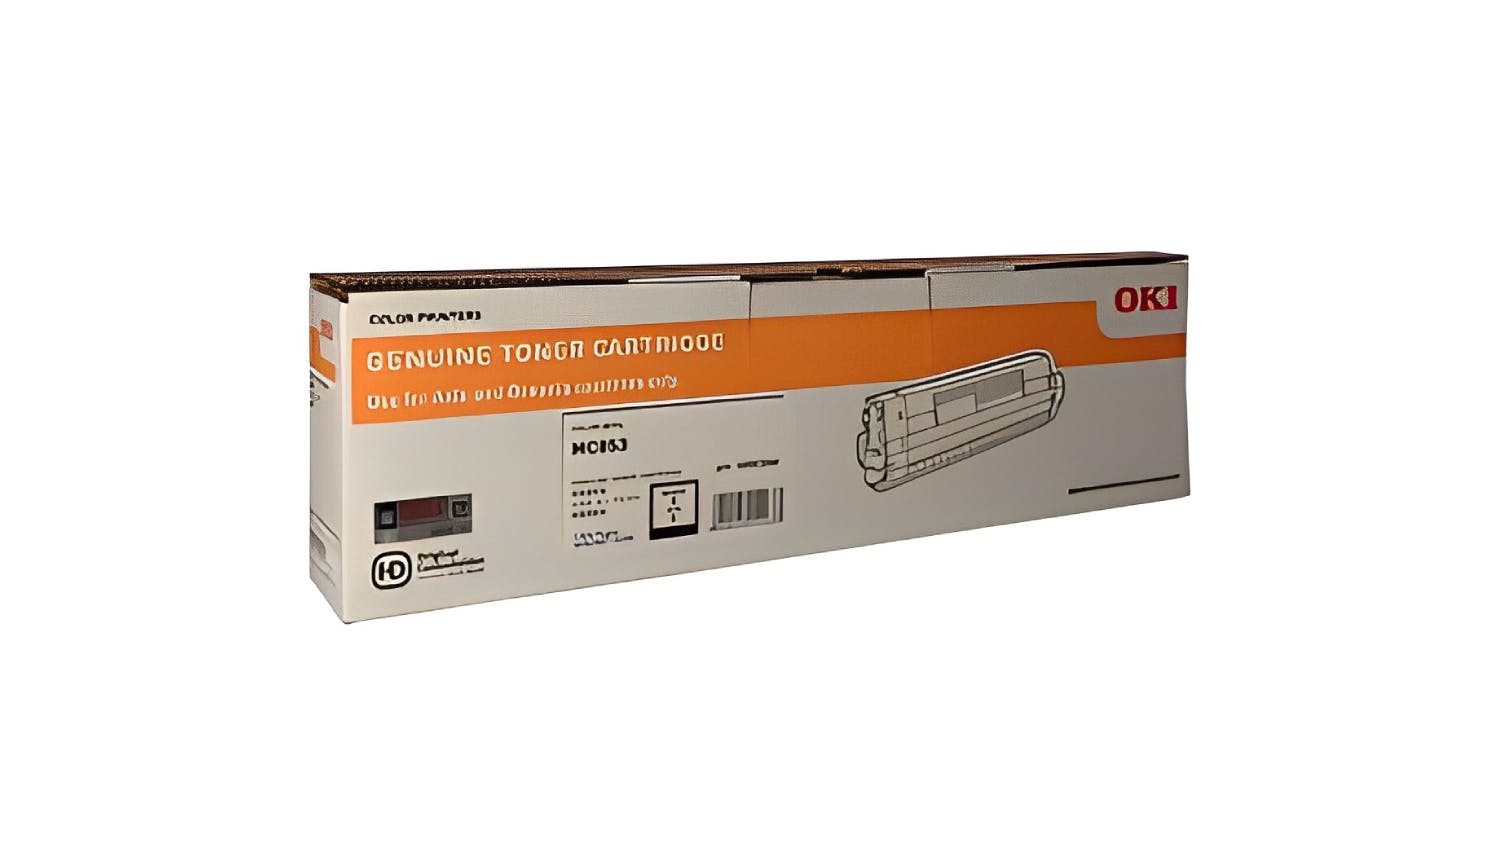 OKI Cartridge for MC853/MC873 Model Printers - Black | Harvey Norman New Zealand